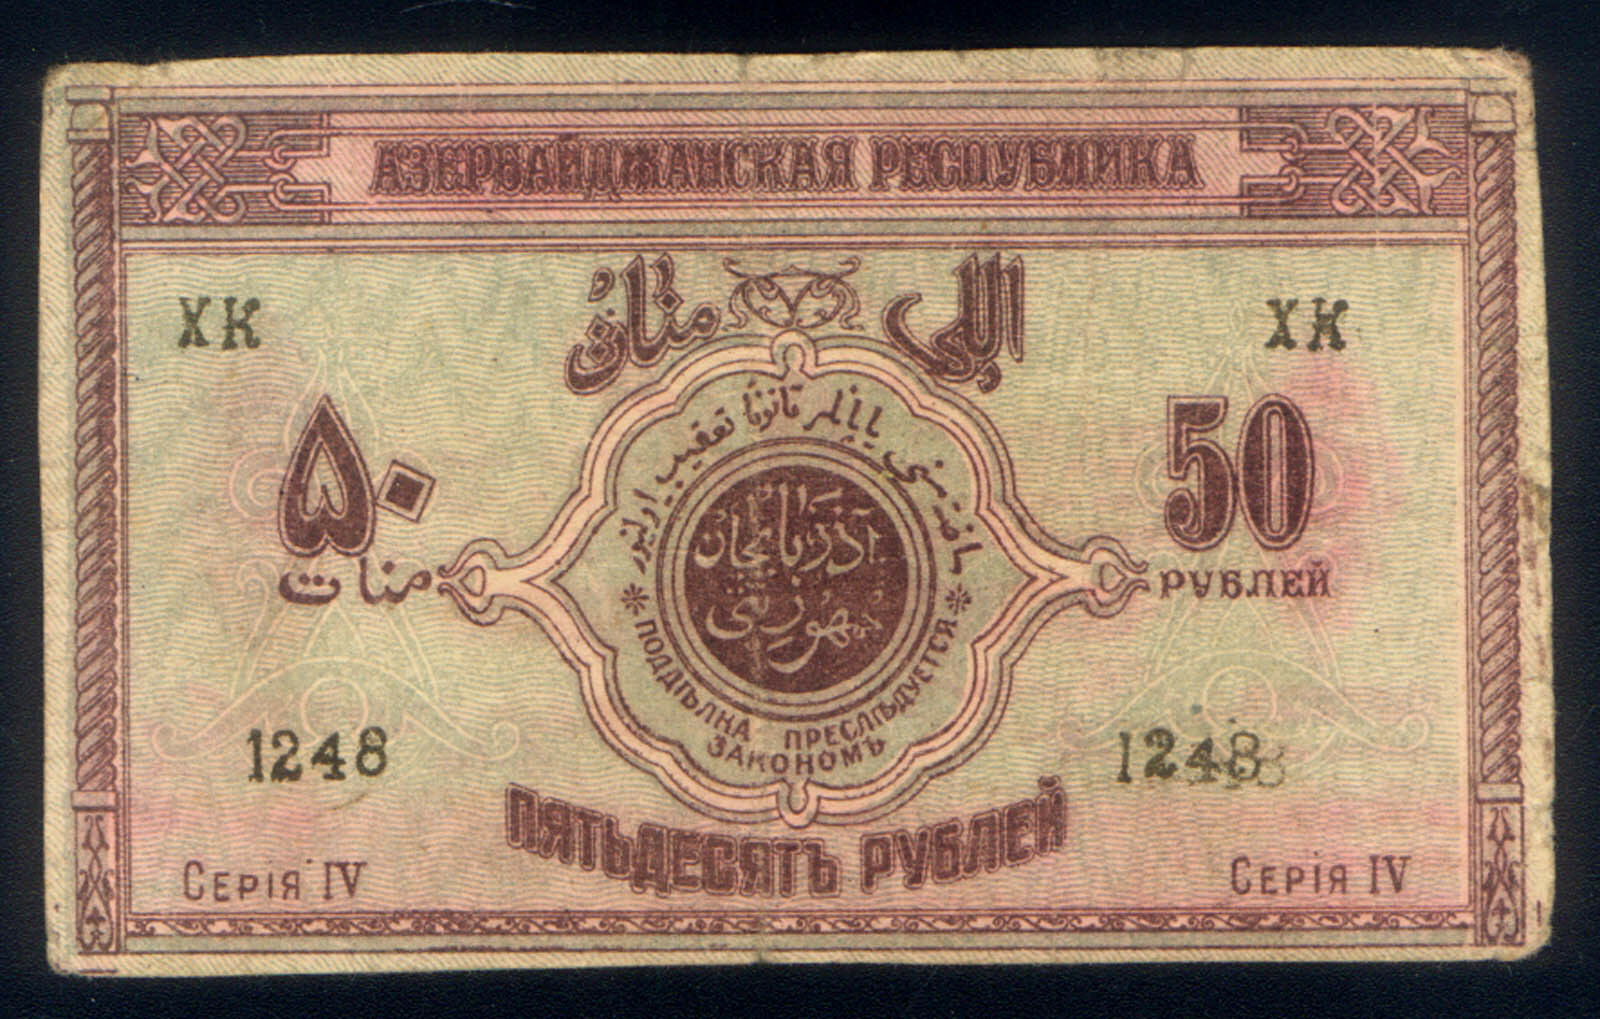 AZERBAIJAN SERIAL NUMBER 1248 ERROR PRINT on 50 RUBLES of 1919 MULTI LINGUAL P#2